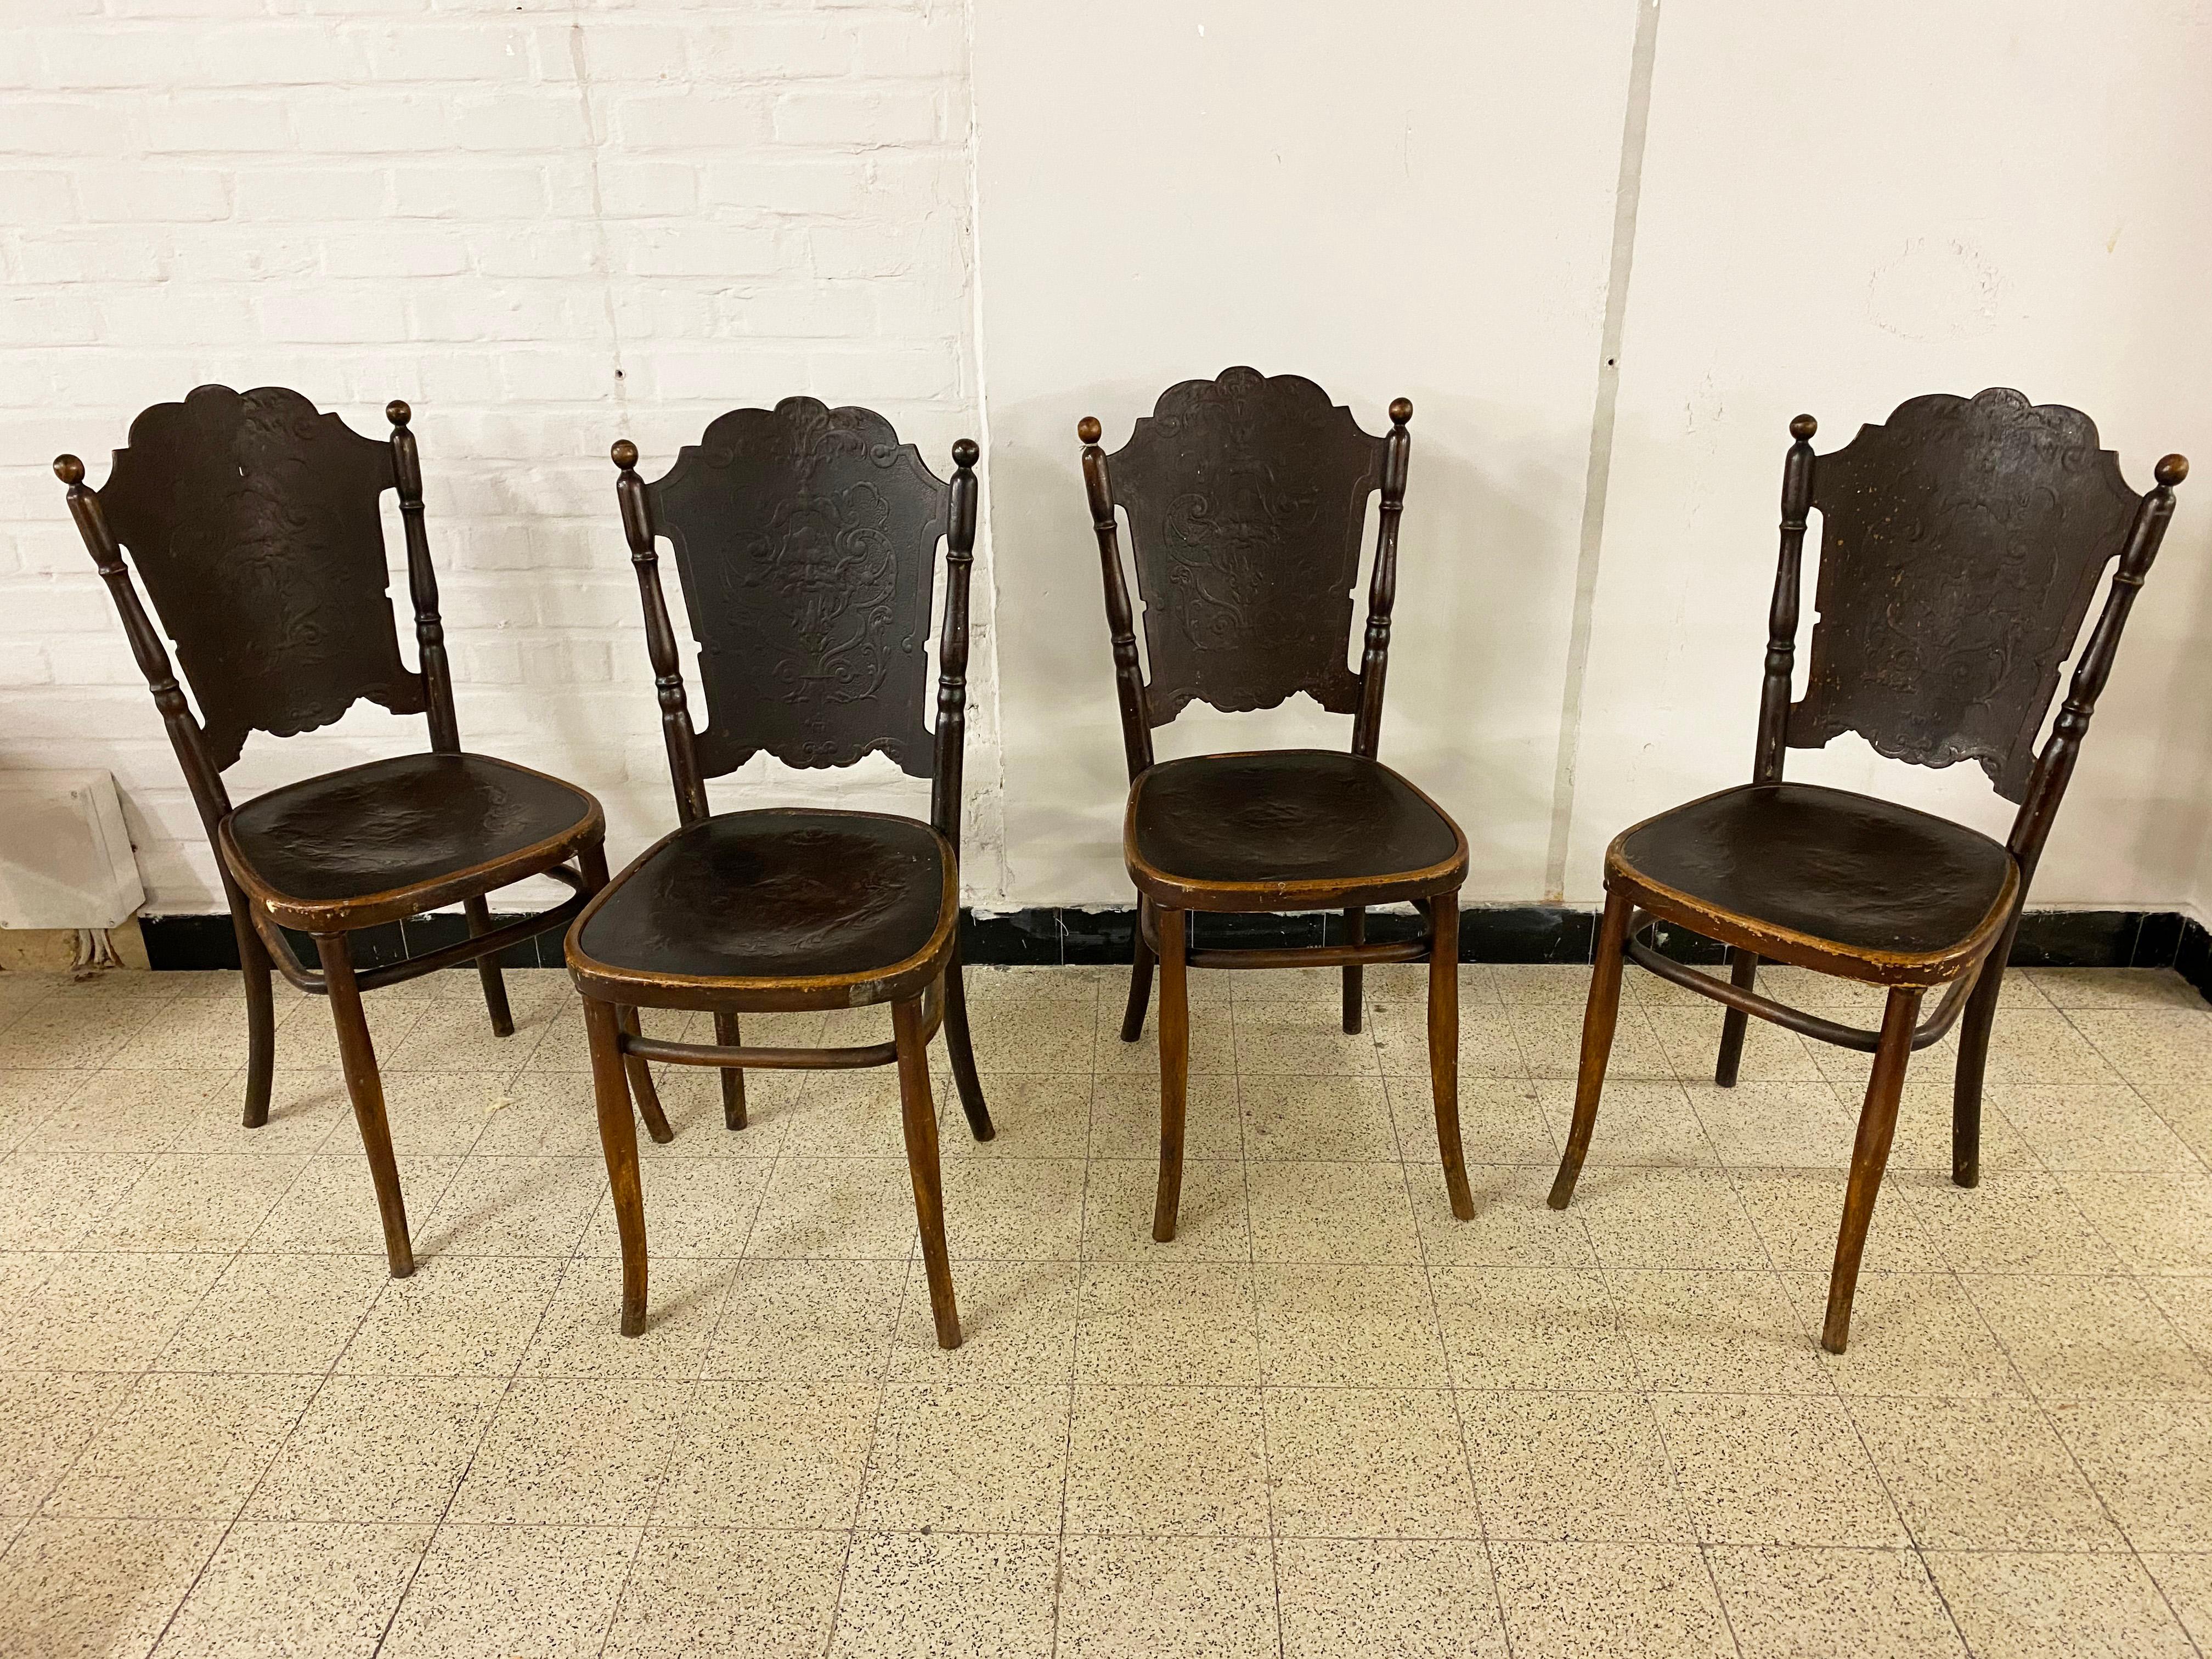 4 antique N ° 67 chairs from Jacob & Josef Kohn,
circa 1900.
Some flaws.